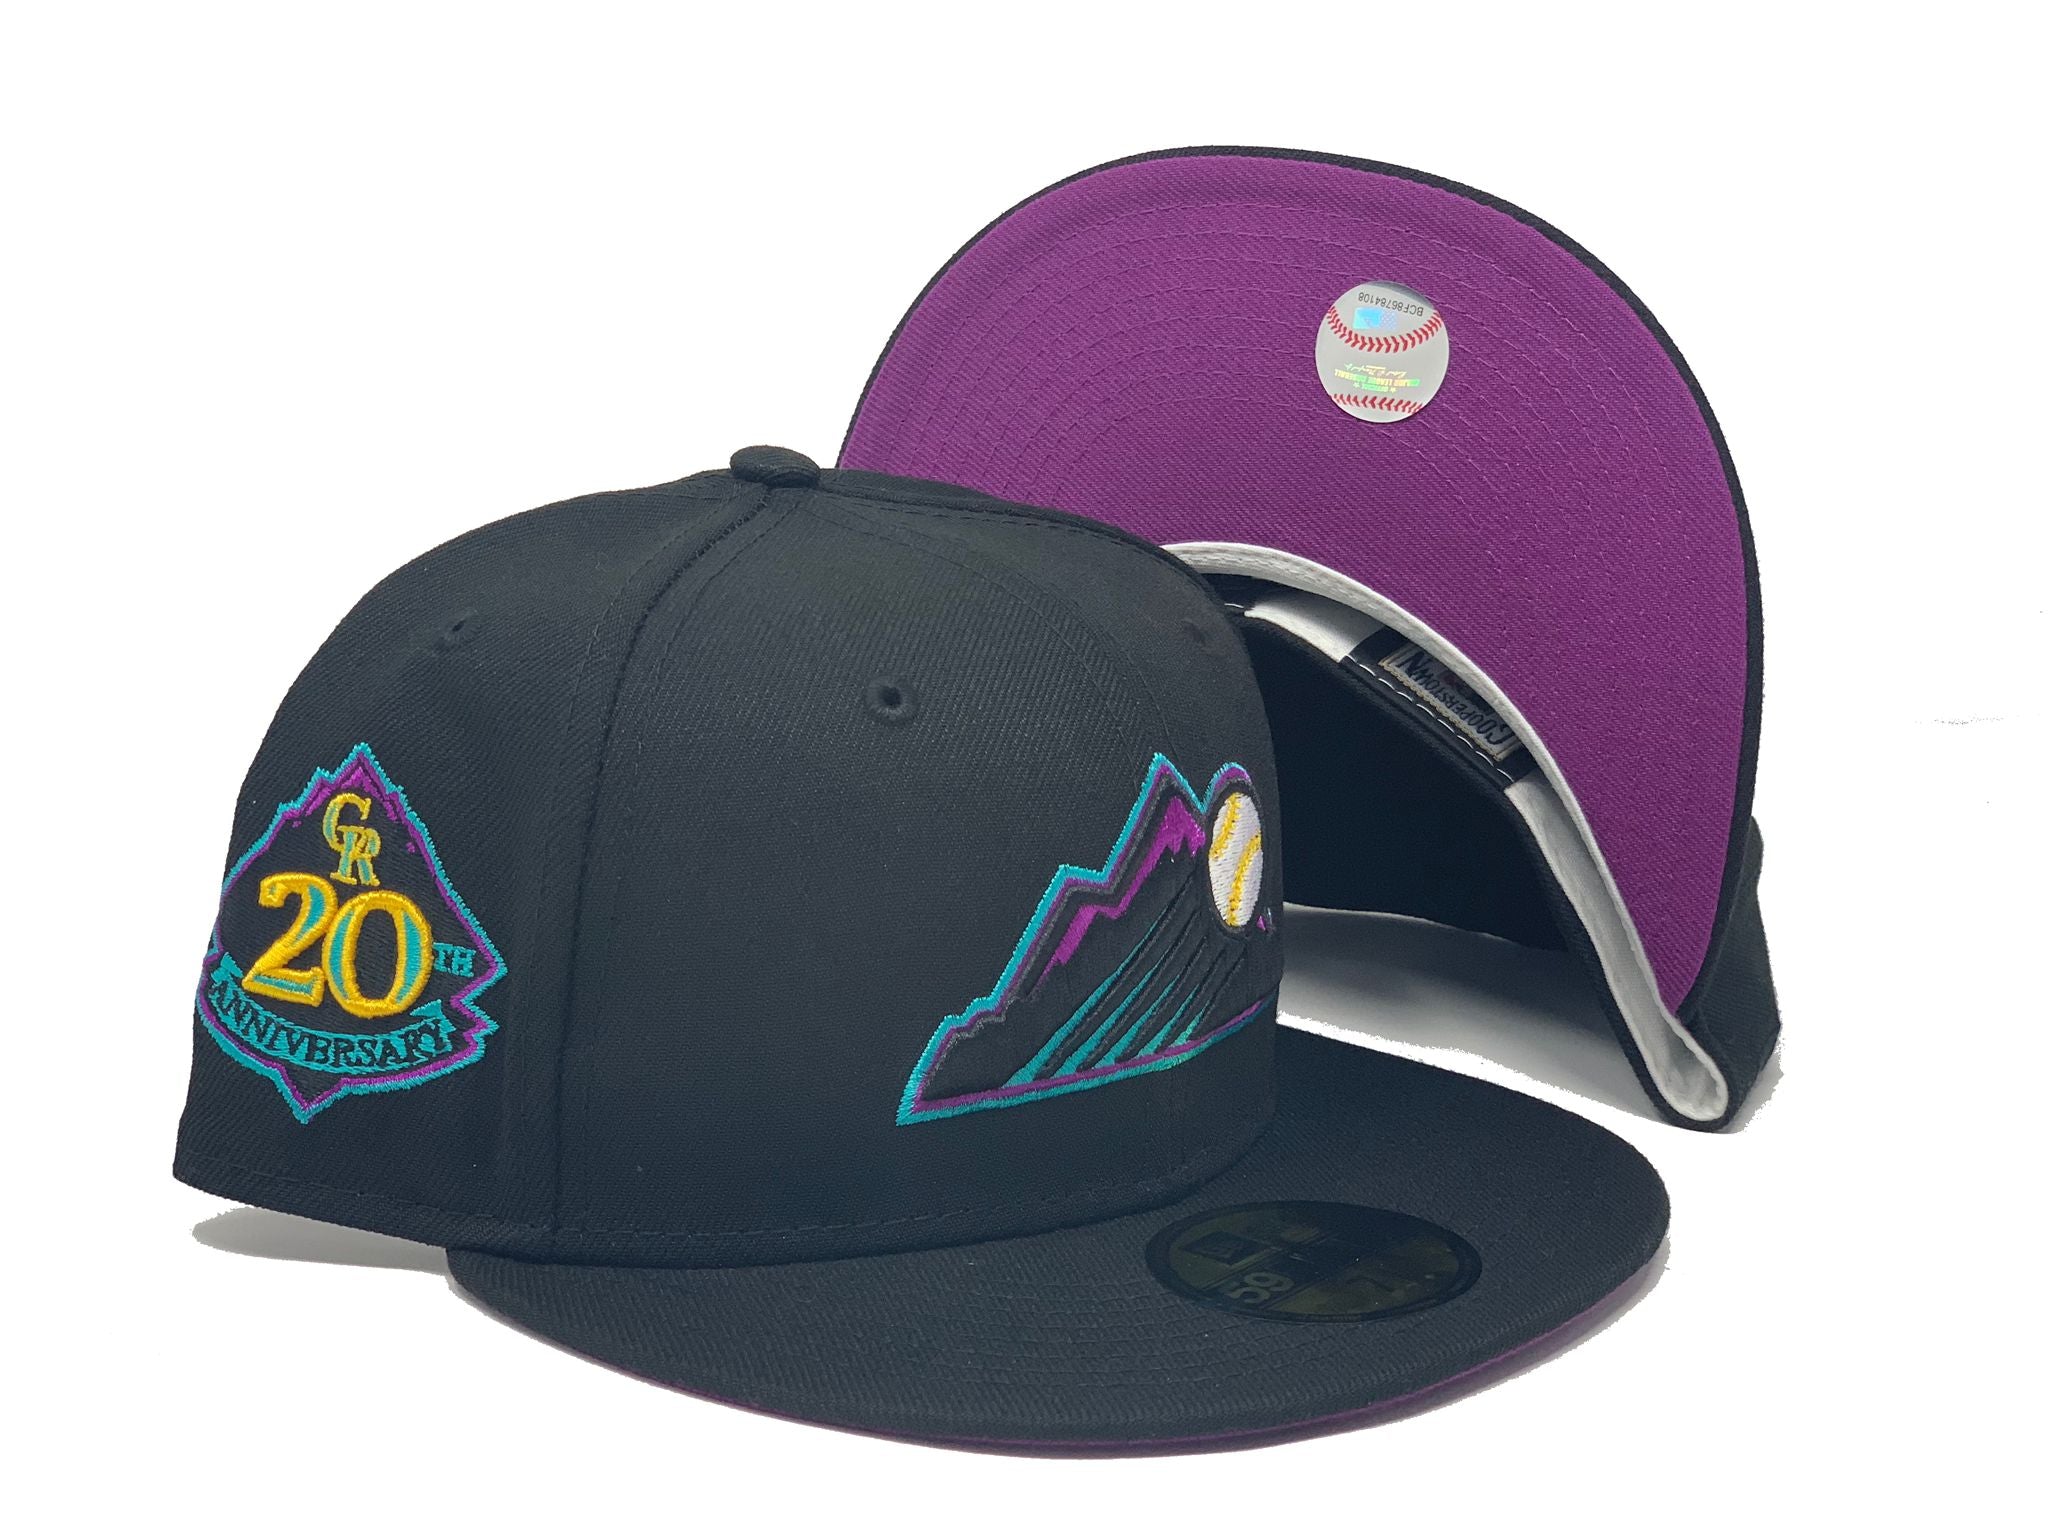 2013 Youth FLAT BRIM Colorado Rockies Alternate Black/Purple Hat Cap MLB  Adjustable